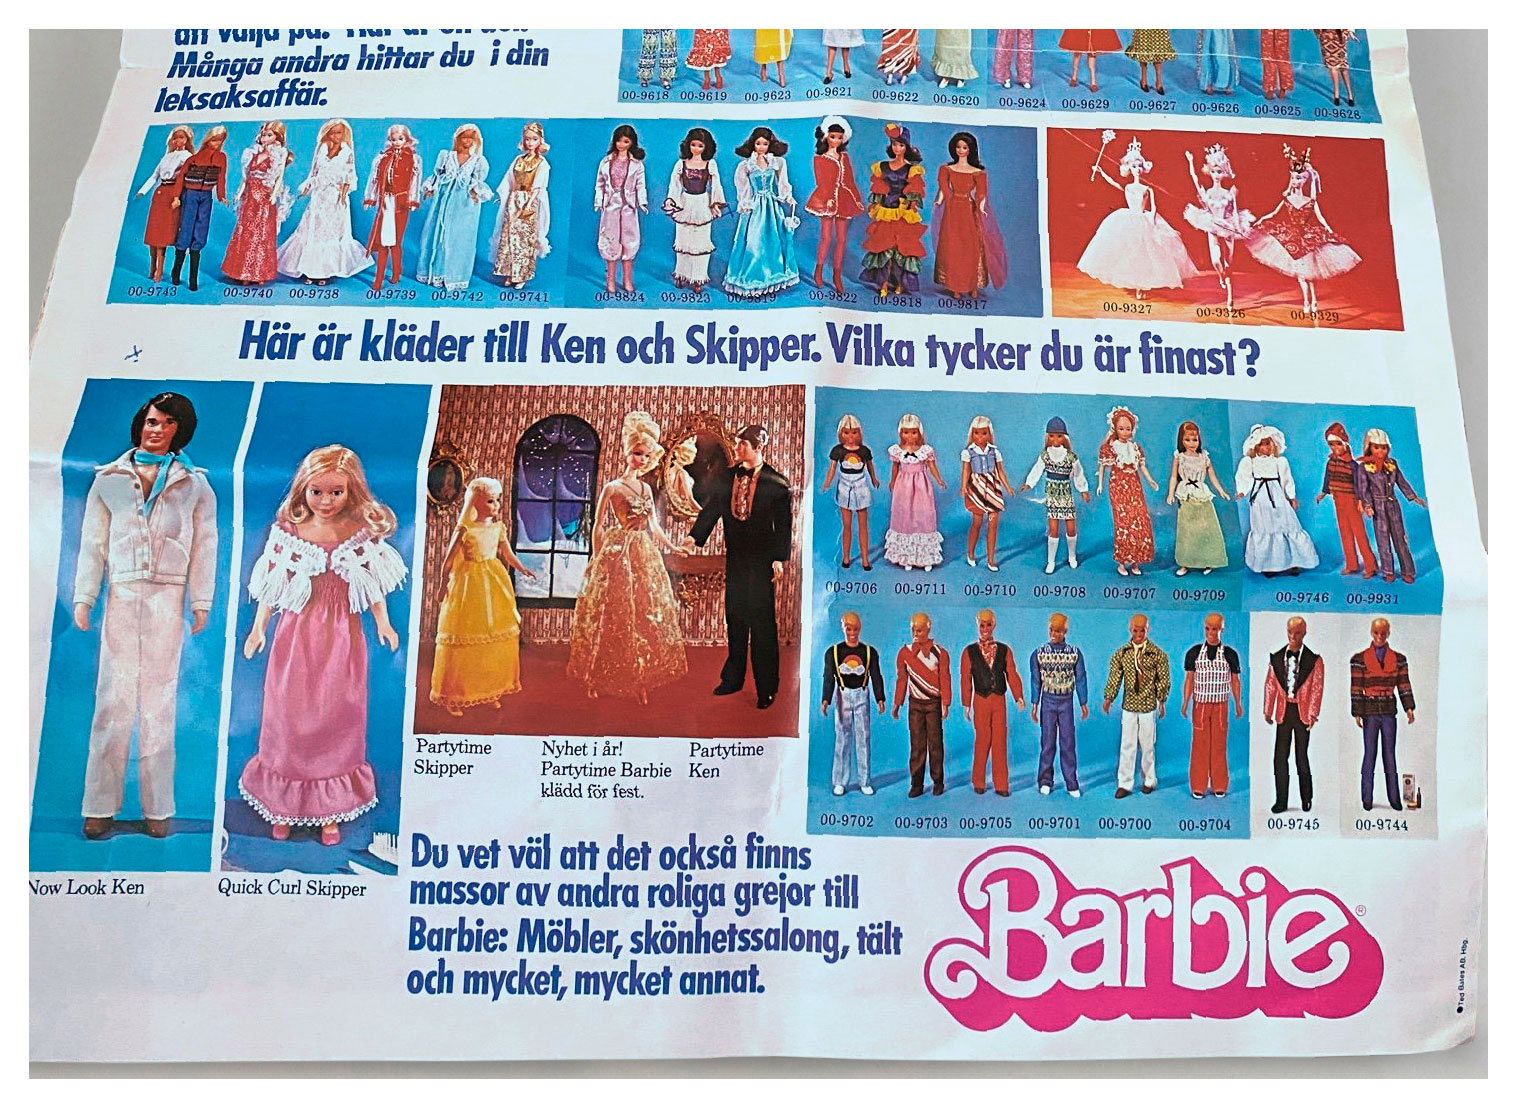 From 1977 Swedish Barbie Bladet 77 comic